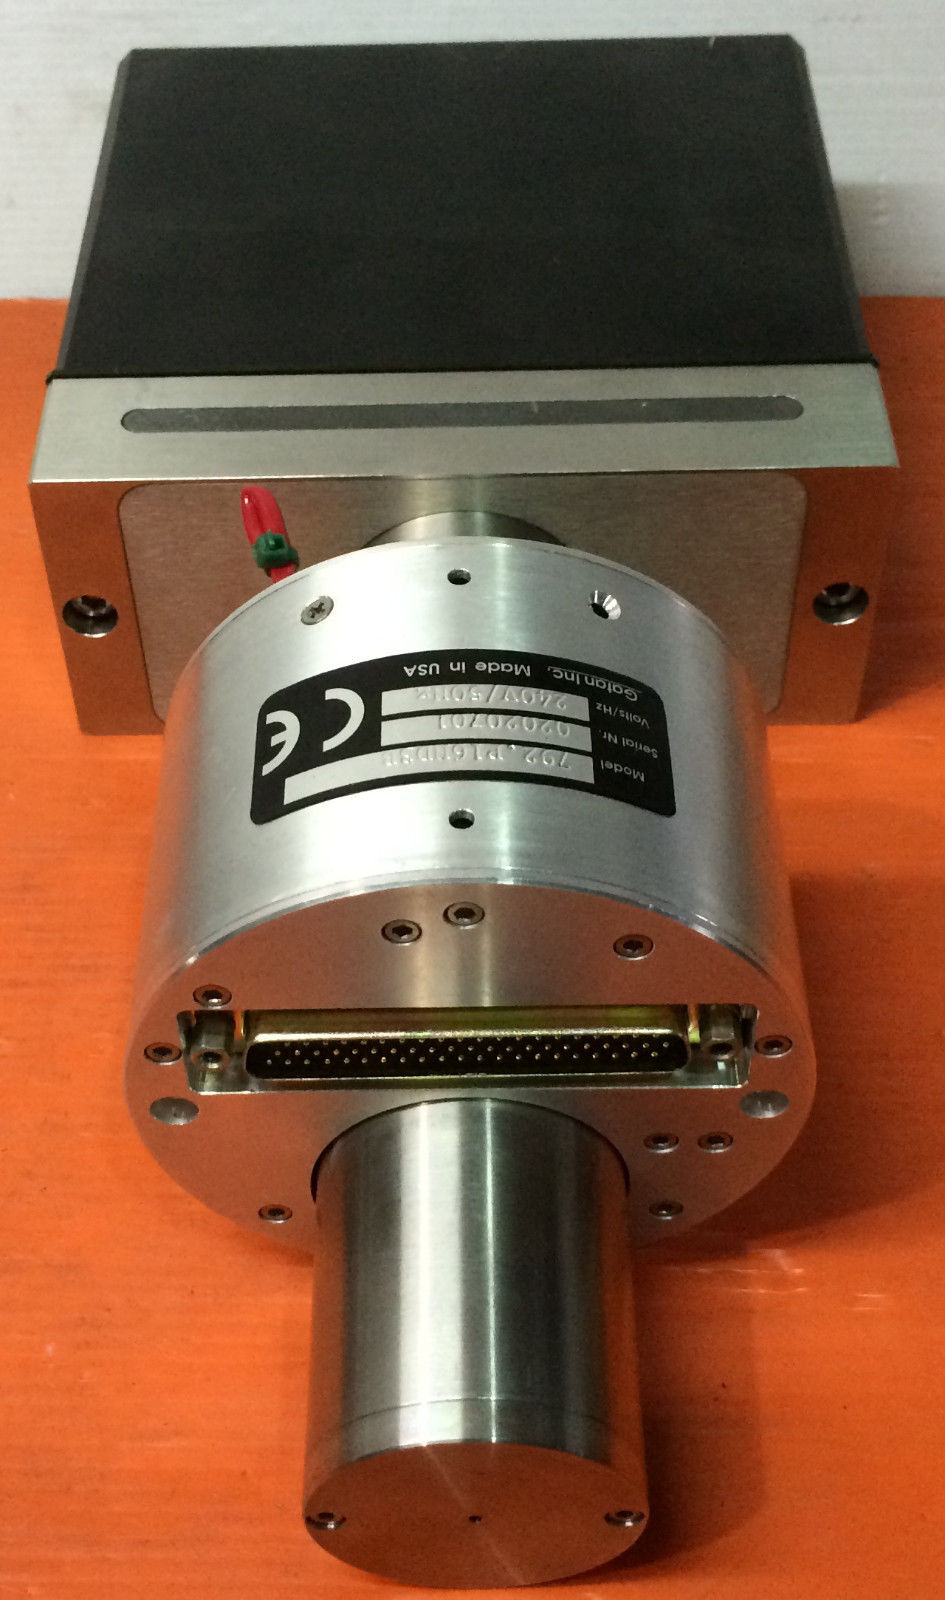 Gatan Bioscan CCD Camera (Model 792)